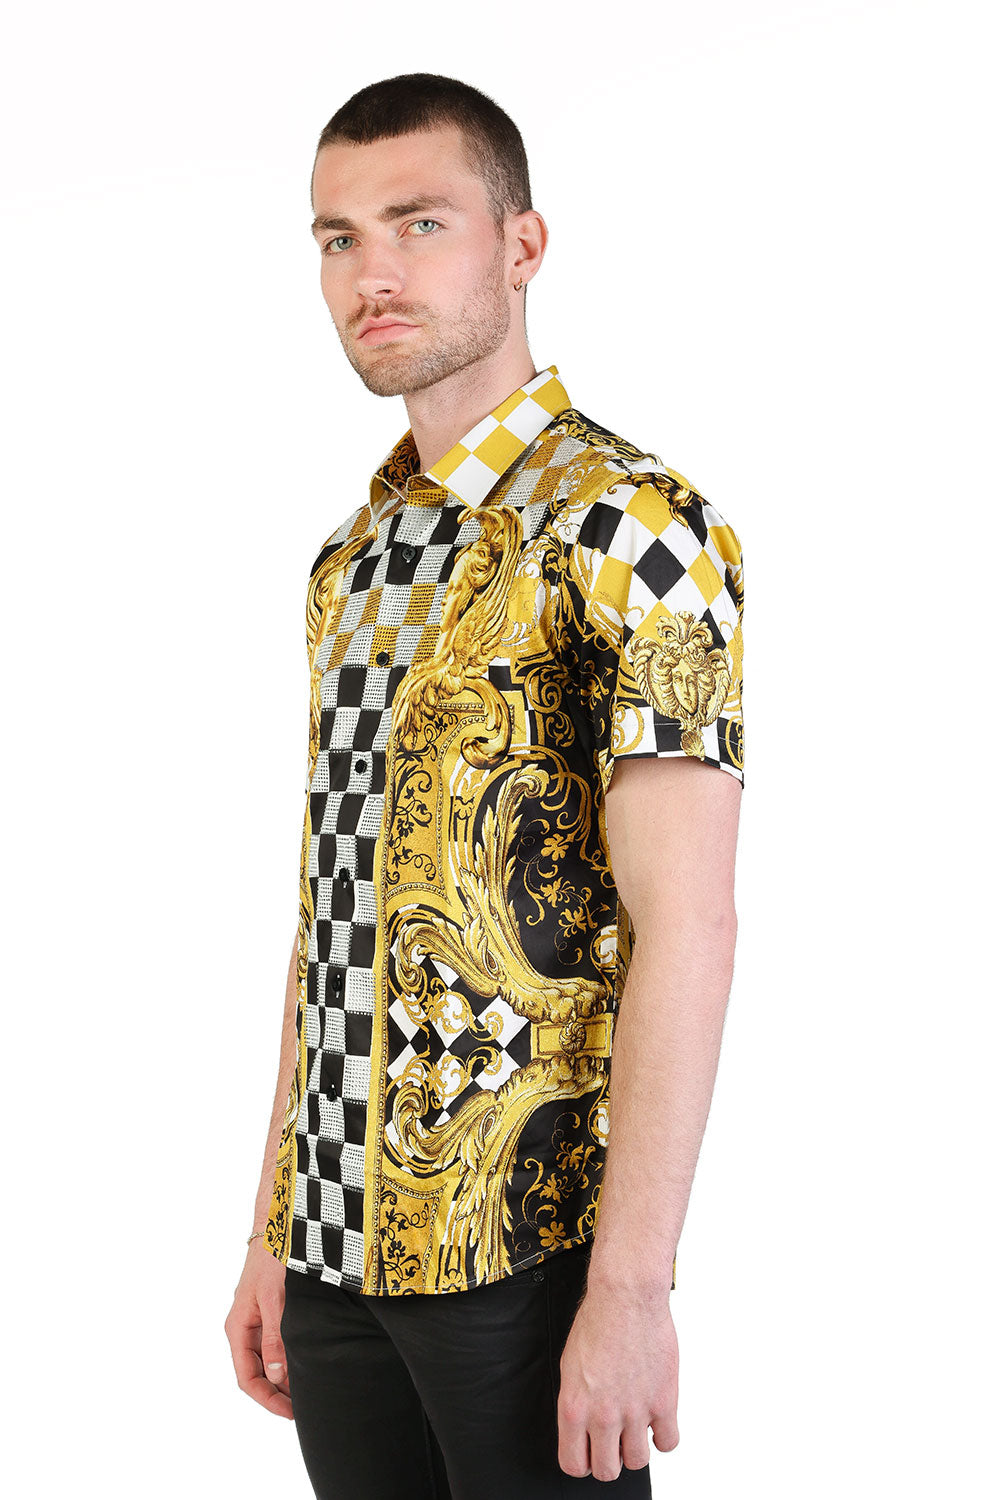 Barabas Men's Baroque Rhinestone Checkered Short Sleeve Shirts SSR20 gold black 